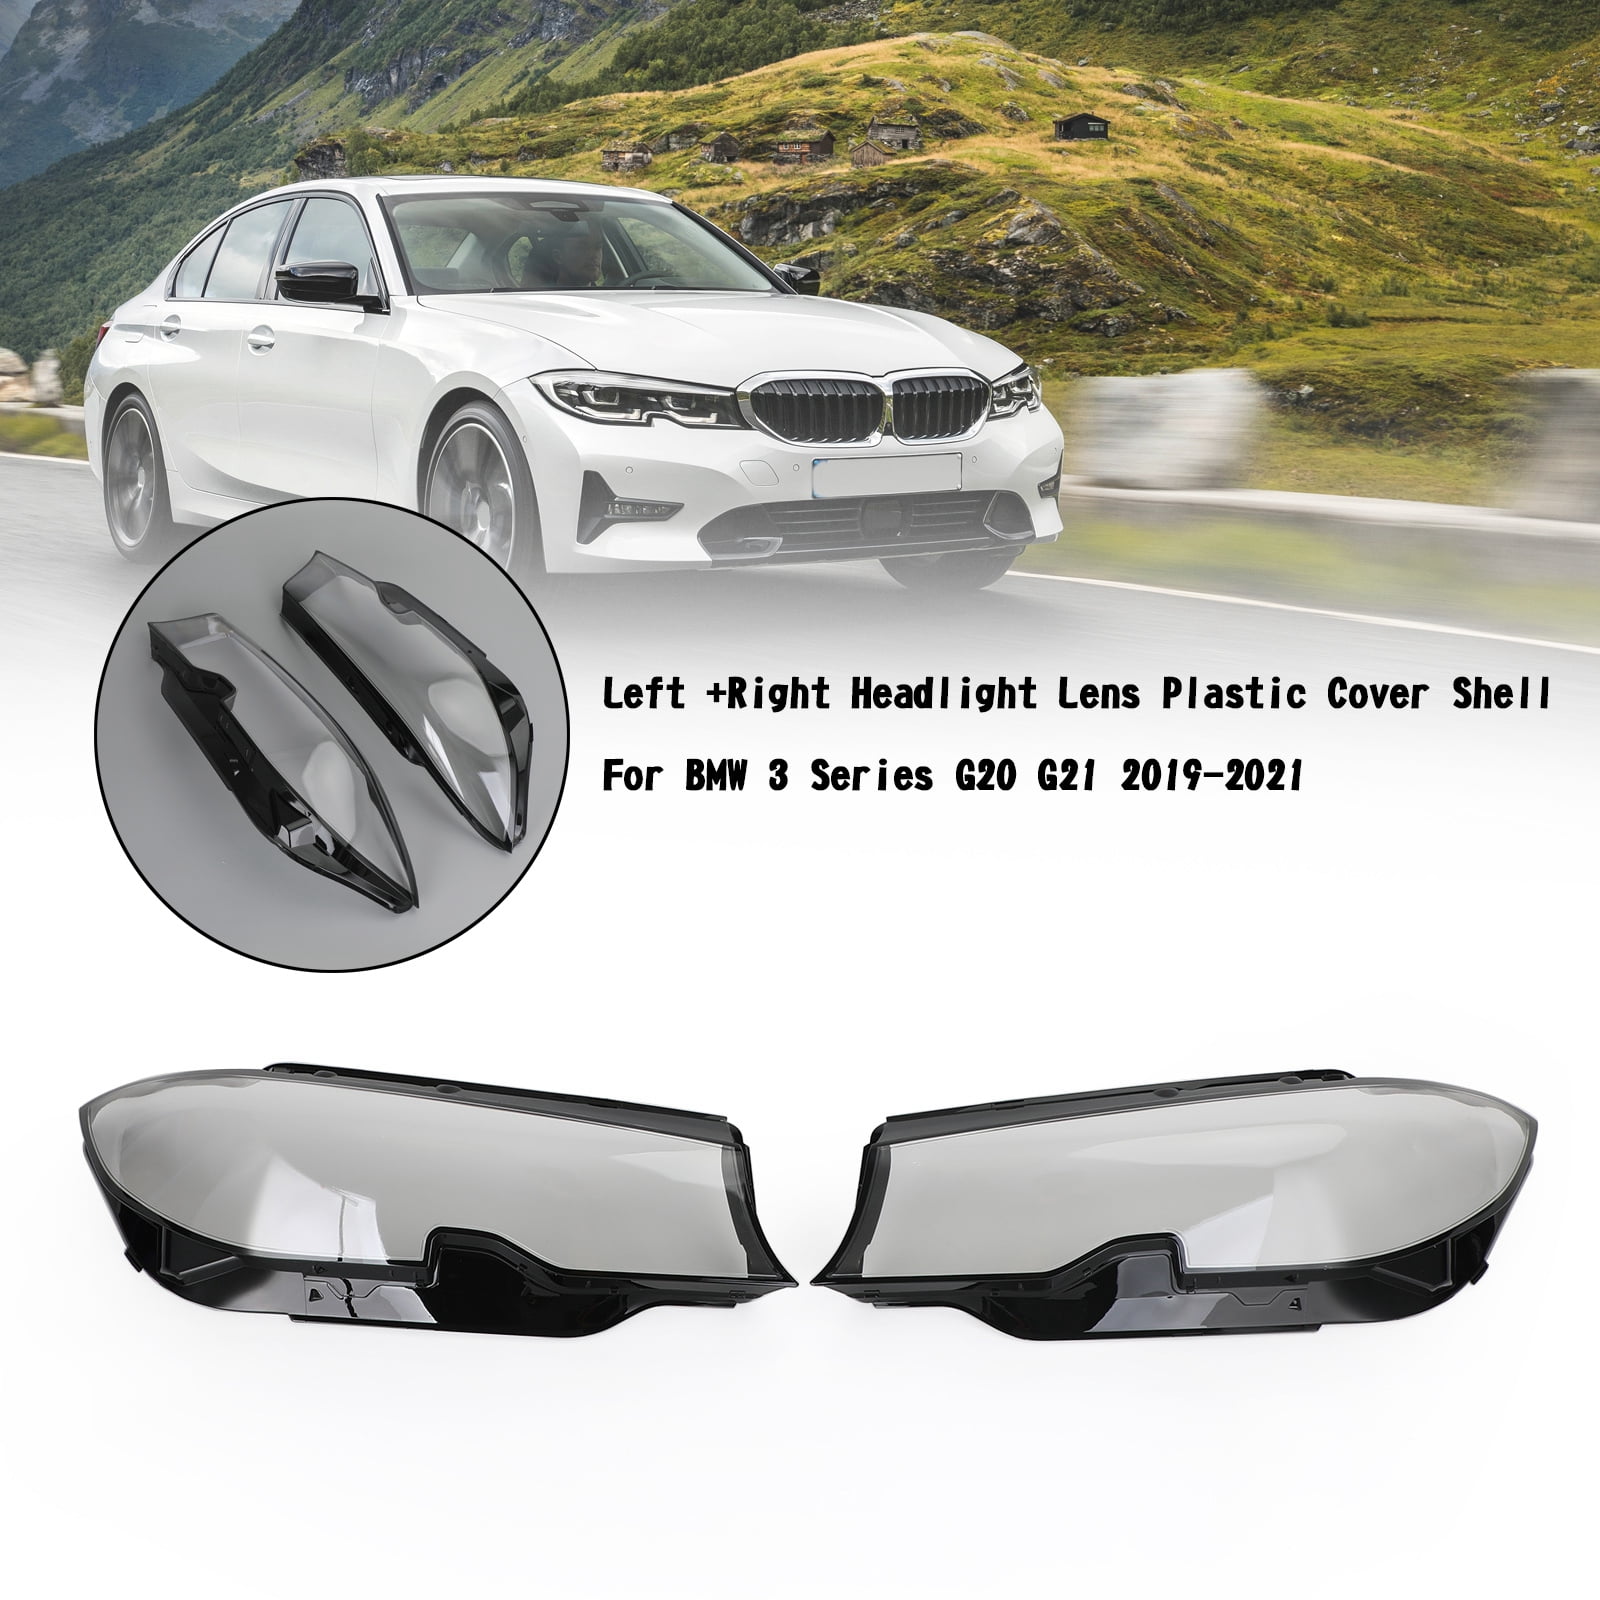 Left +Right Headlight Lens Plastic Cover Shell For BMW 3 Series